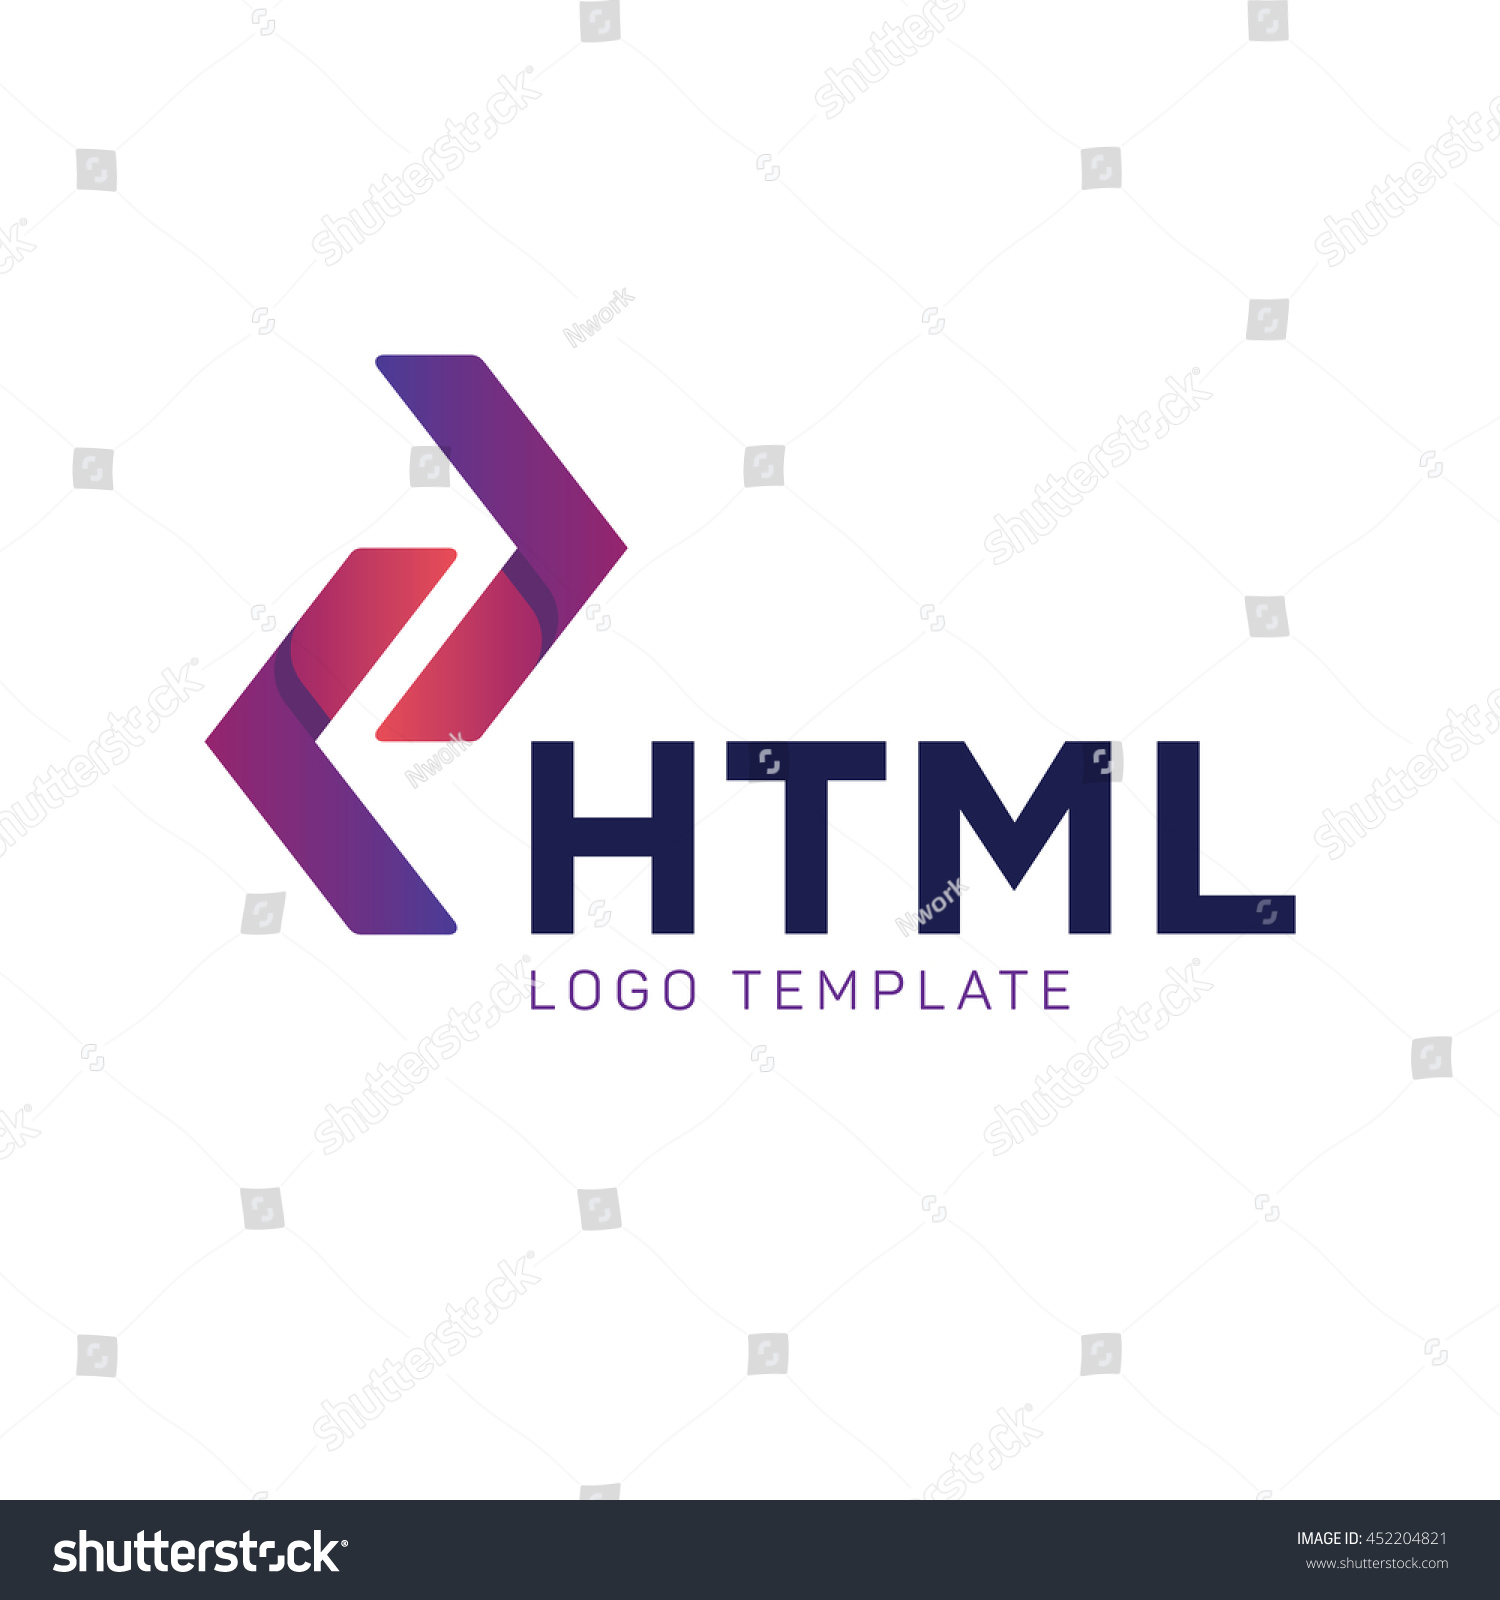 Download Abstract Html Code Logo Design Stock Vector 452204821 ...